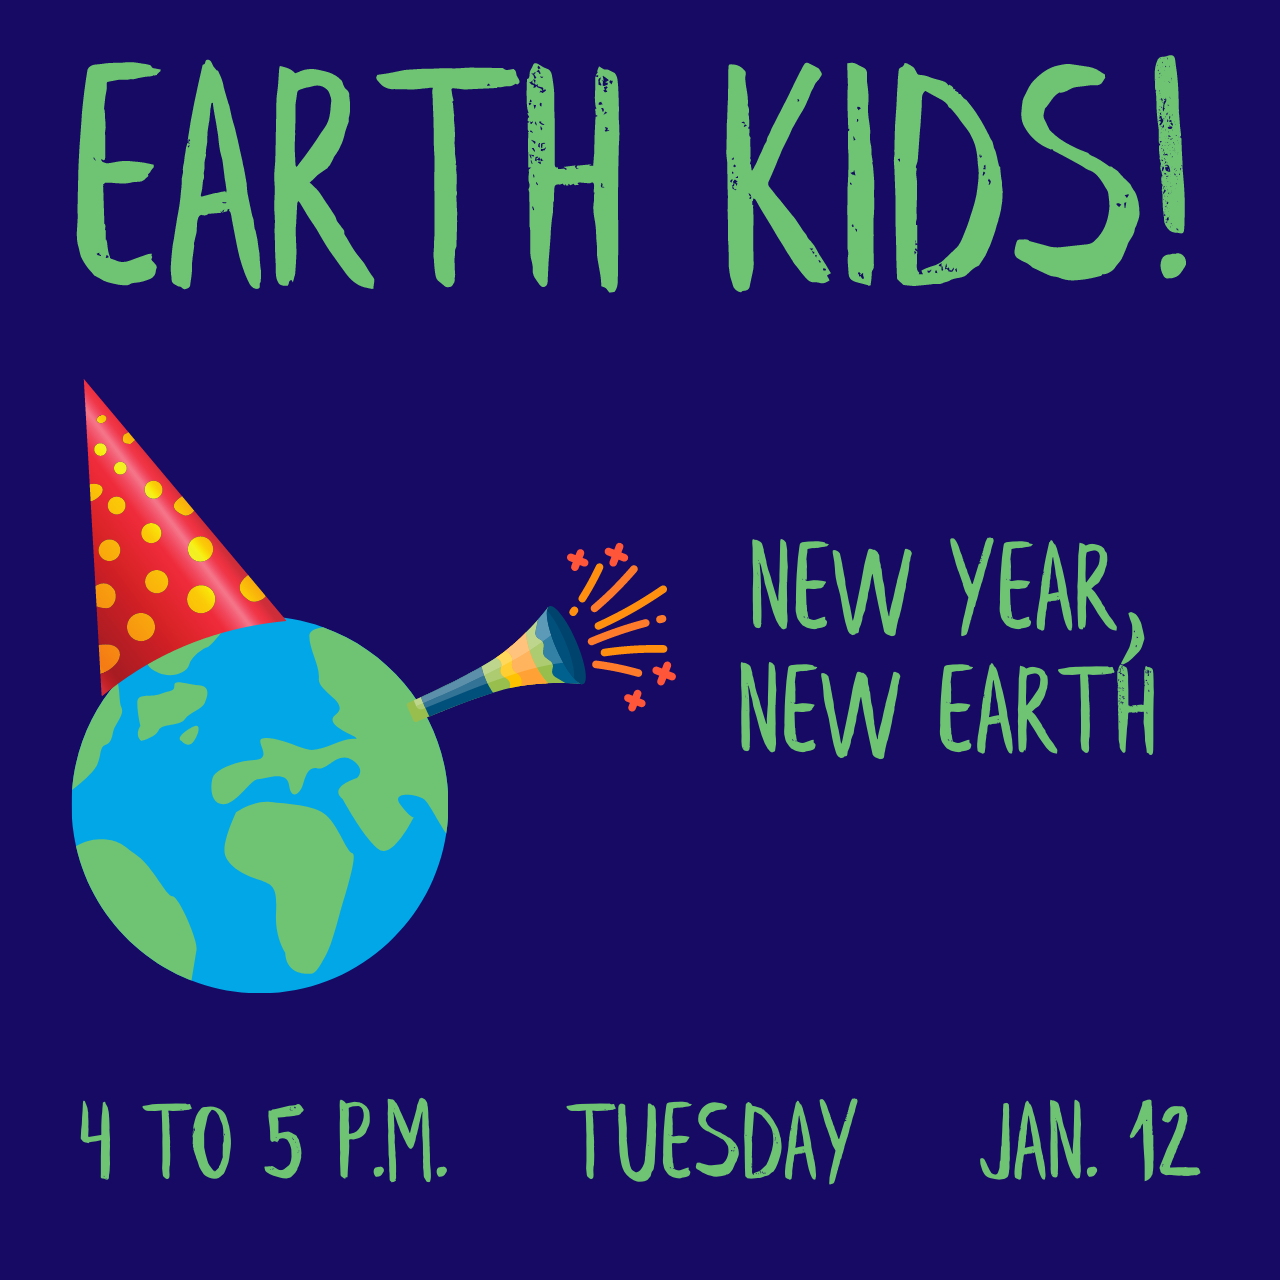 Earth Kids: New Year, New Earth!